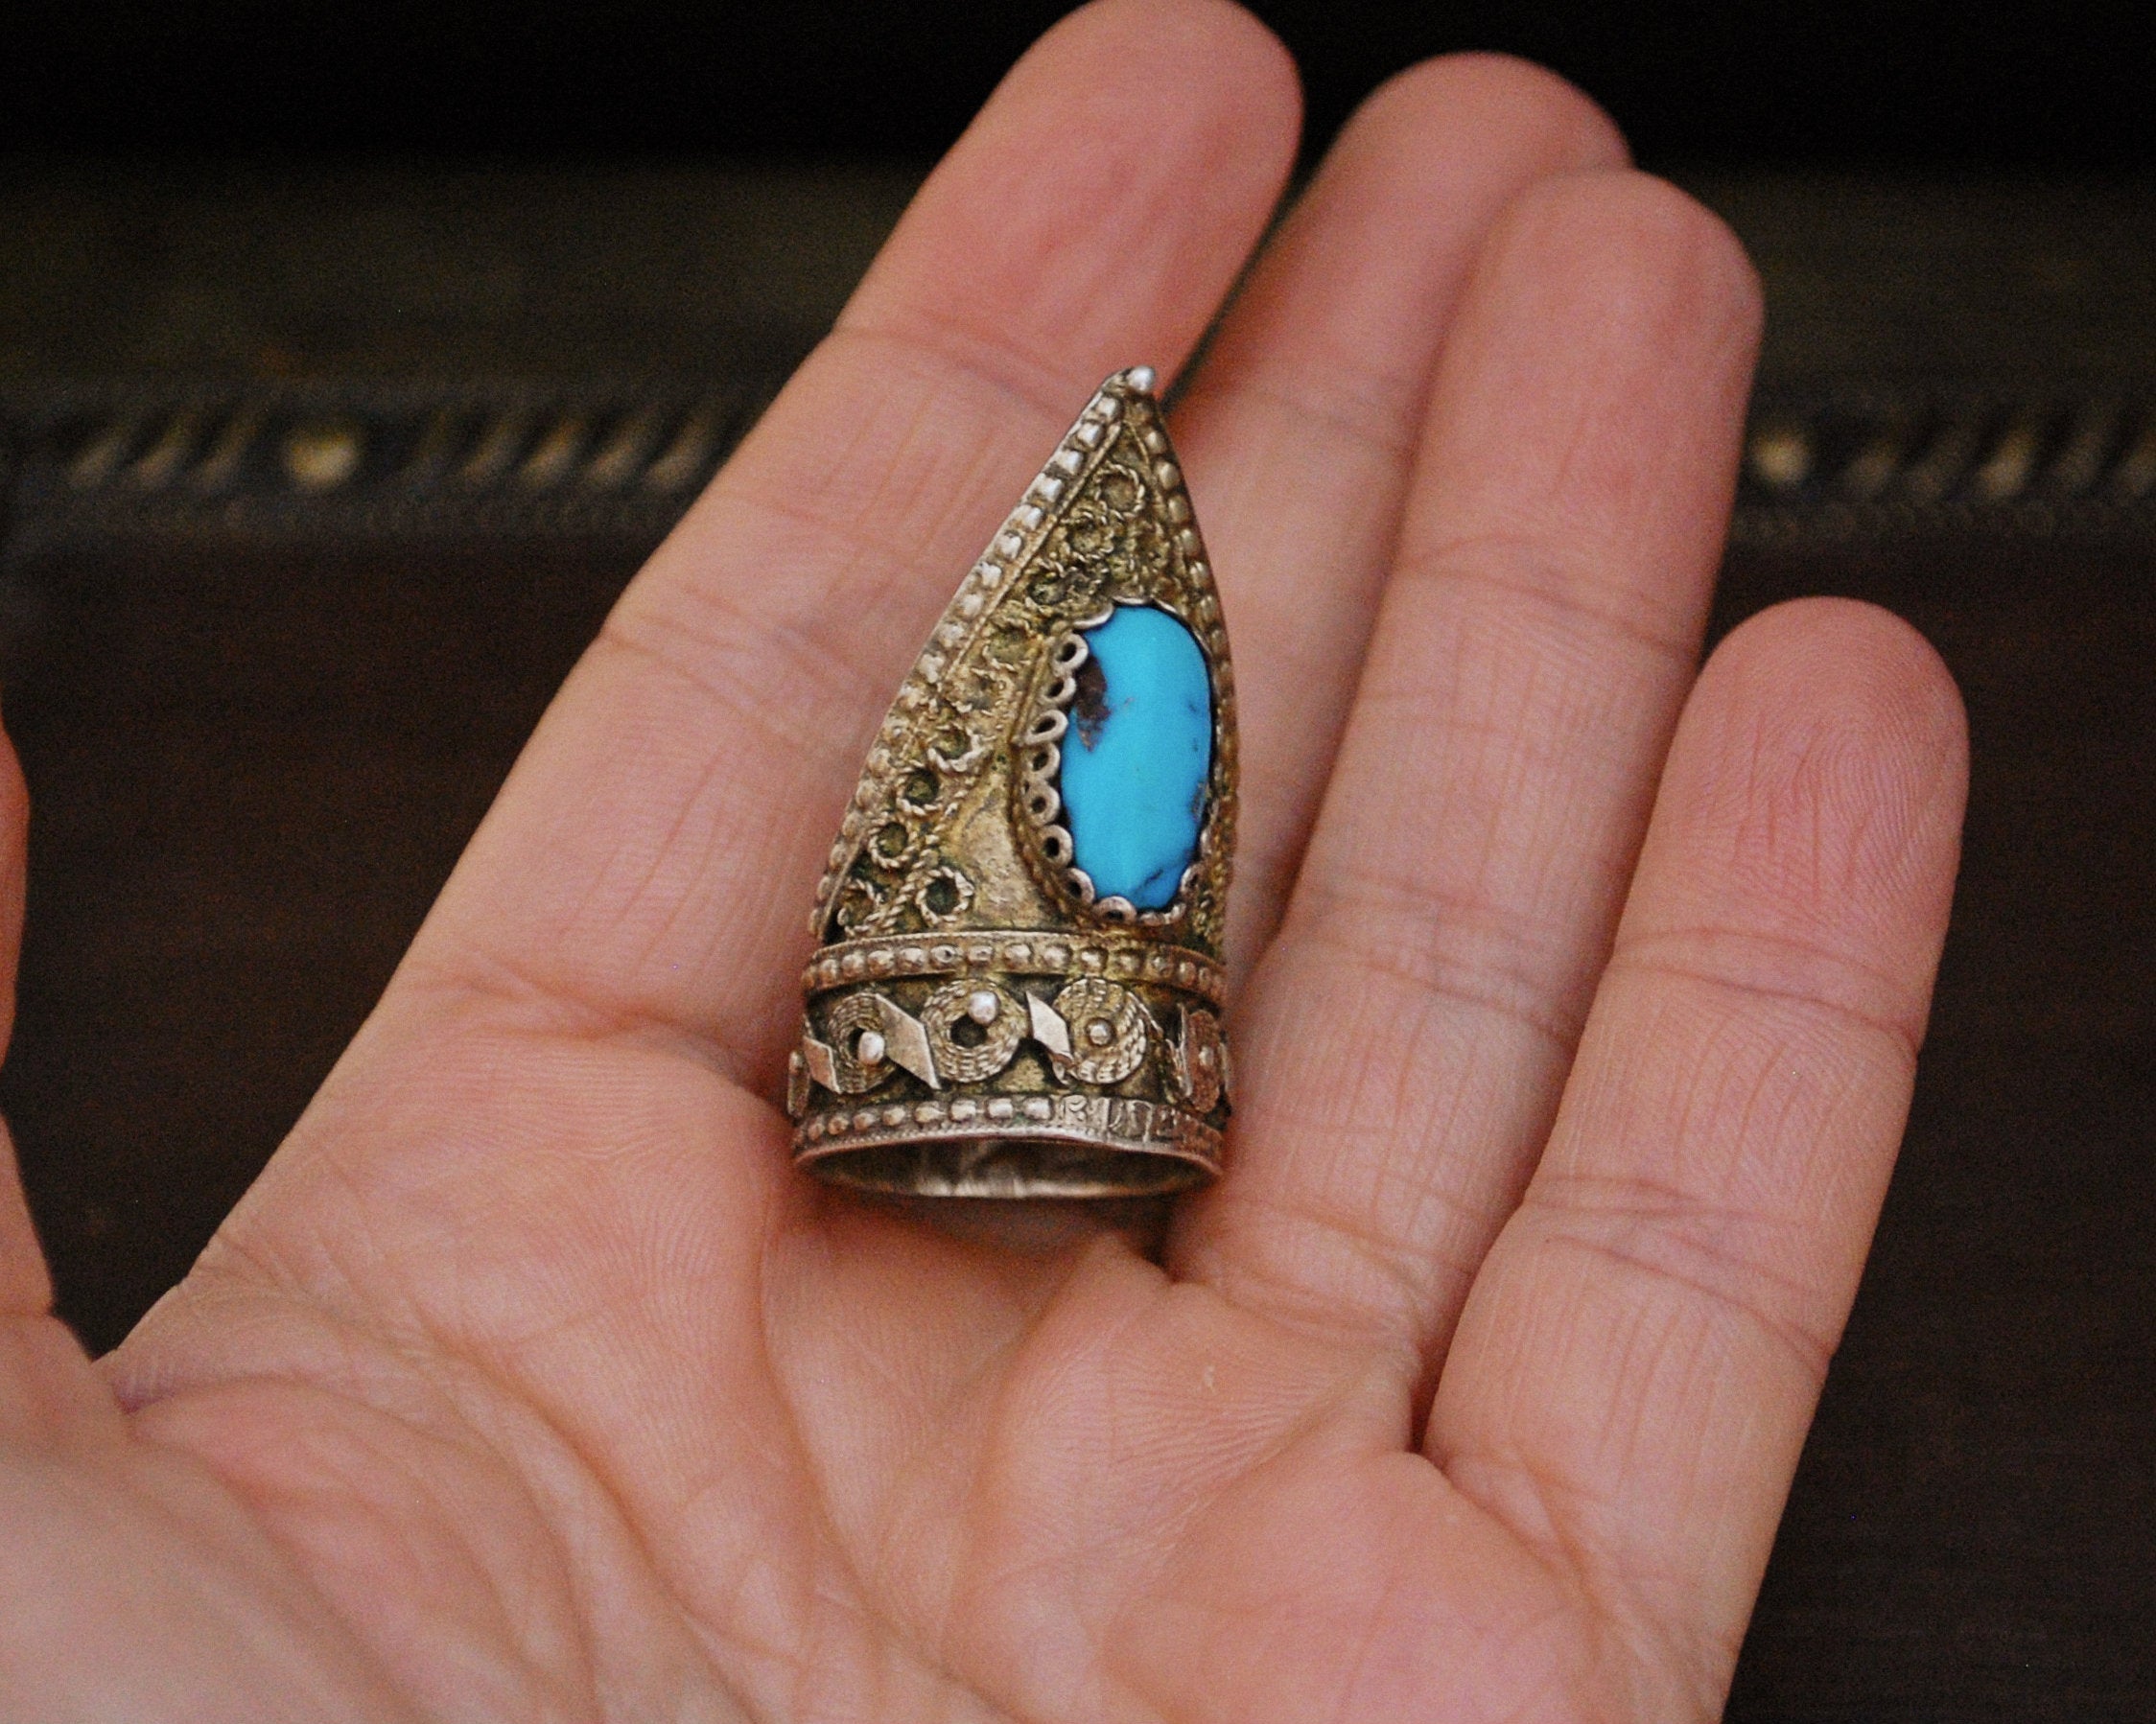 Gilded Yemeni Bedouin Ring with Turquoise - Size 6.5